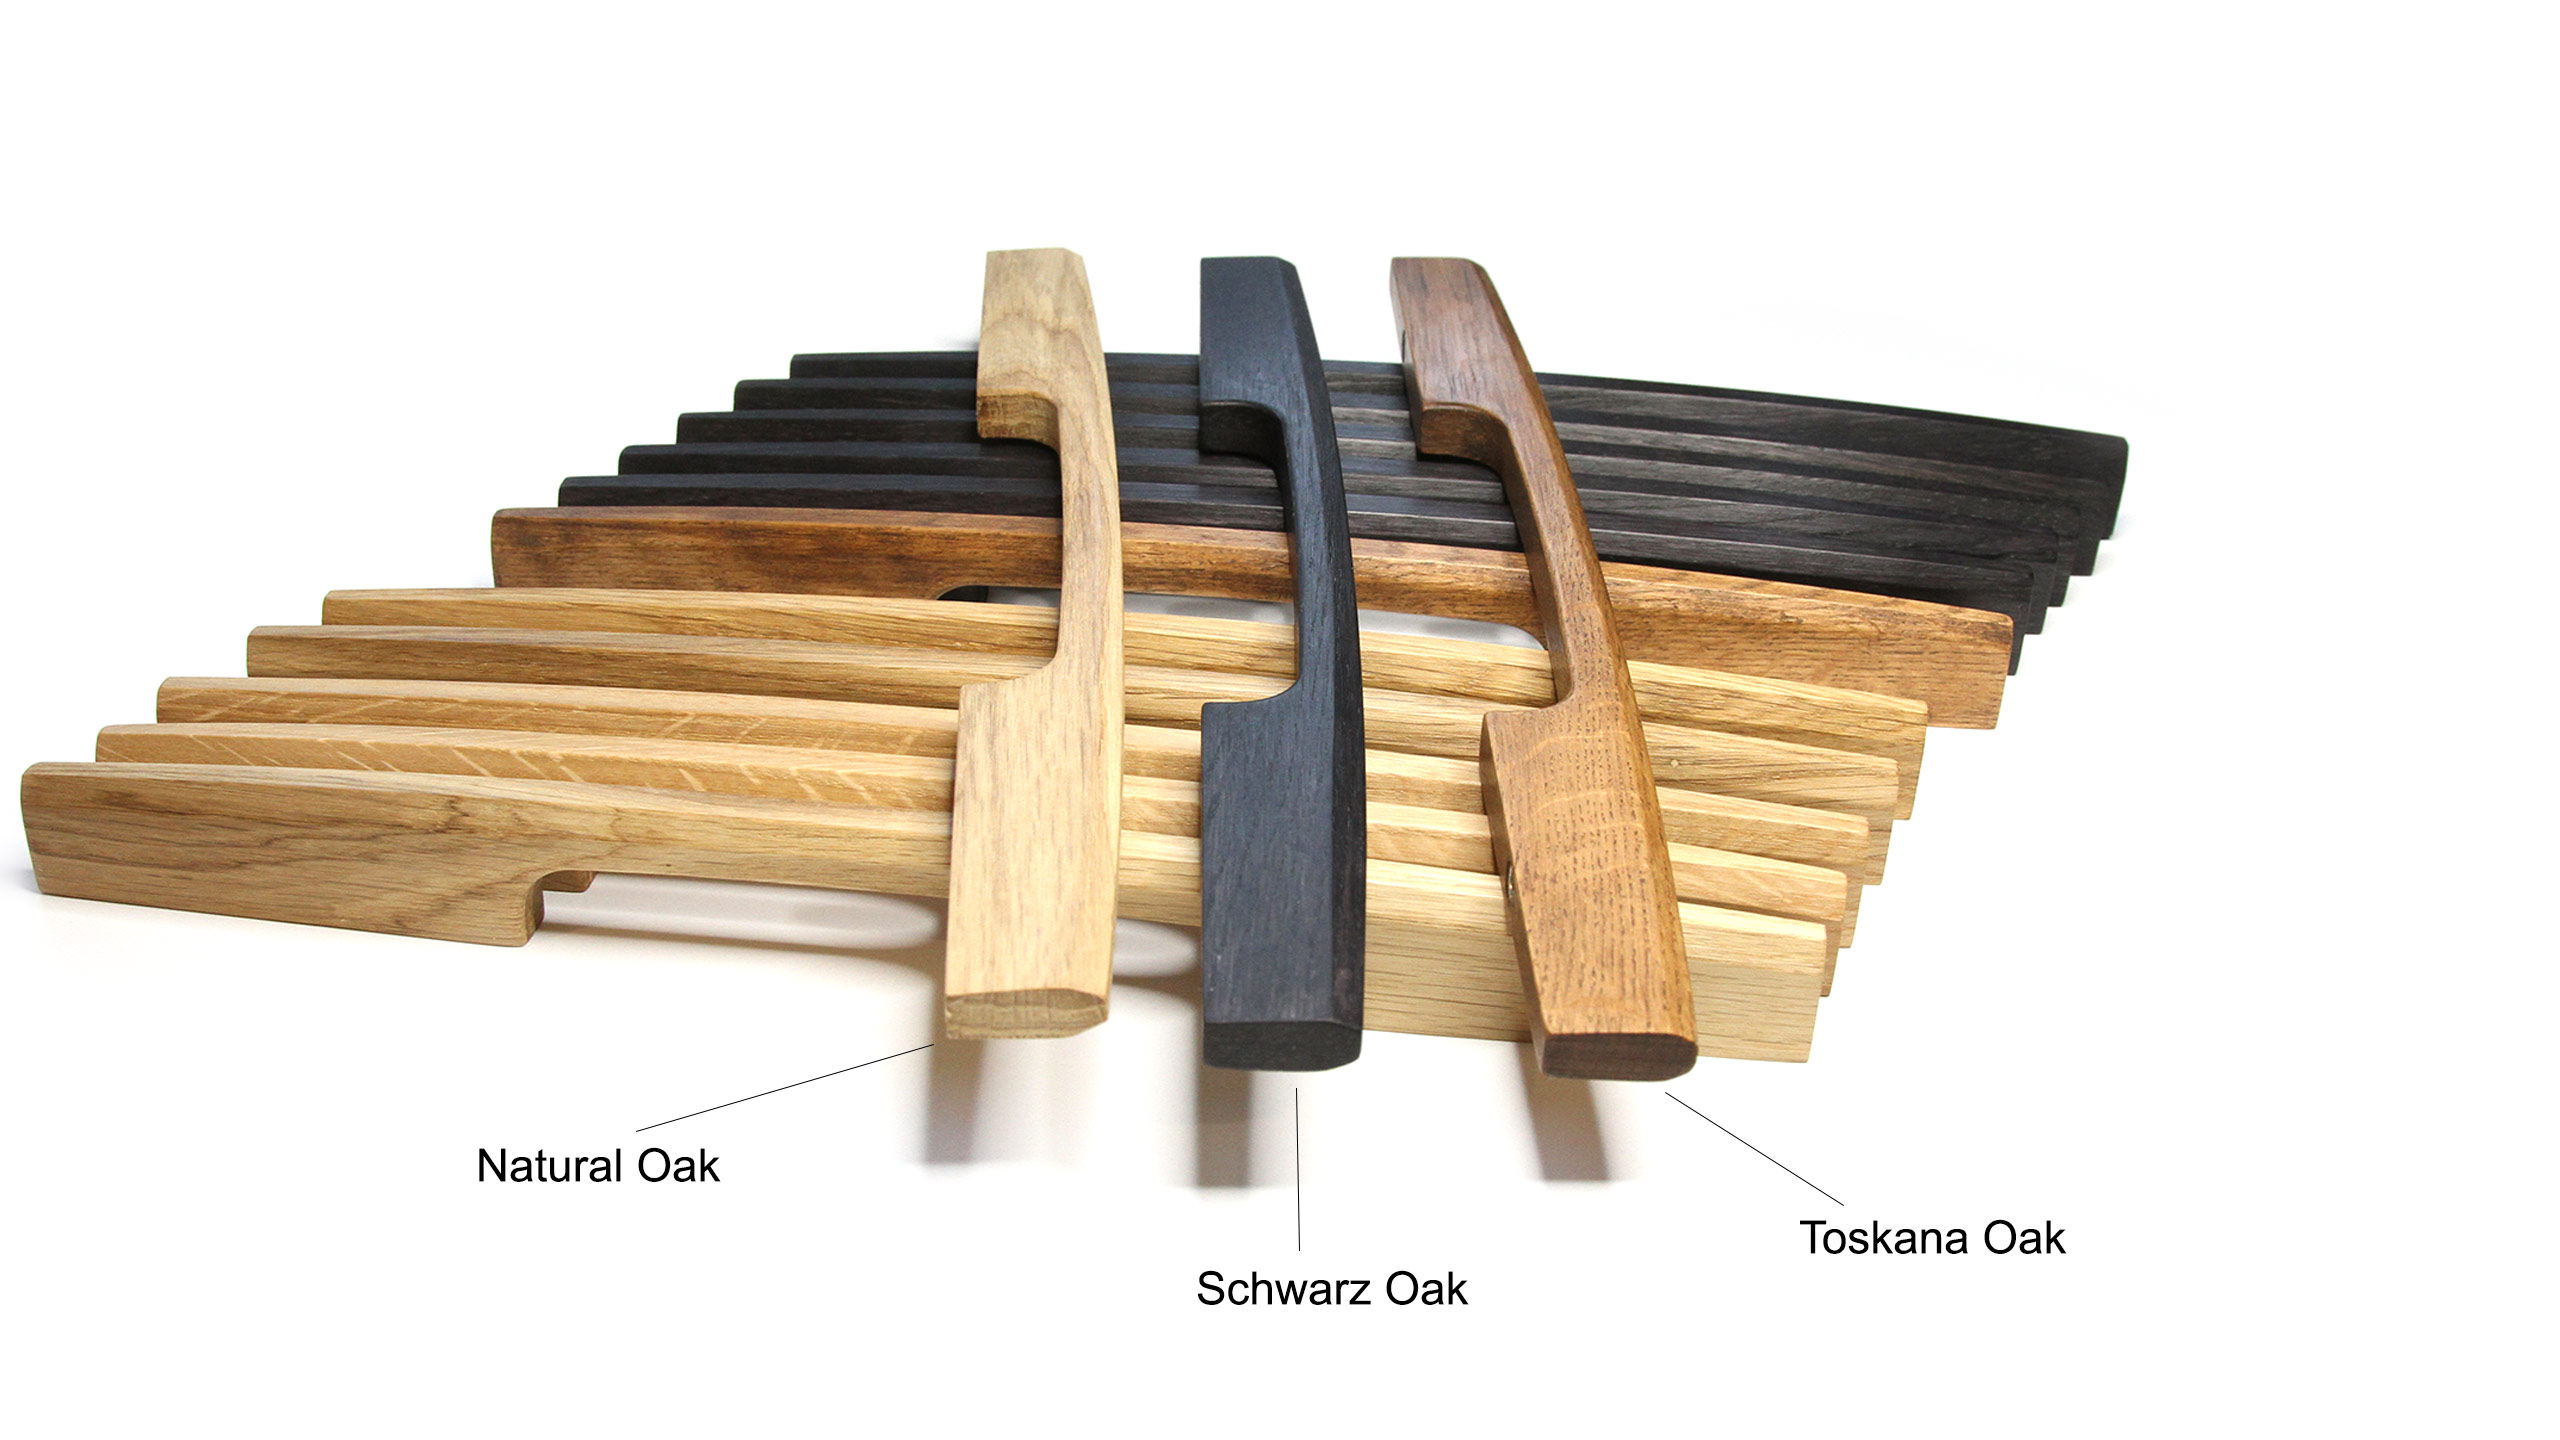 Graceful wooden handles U-0916 oak toskana black